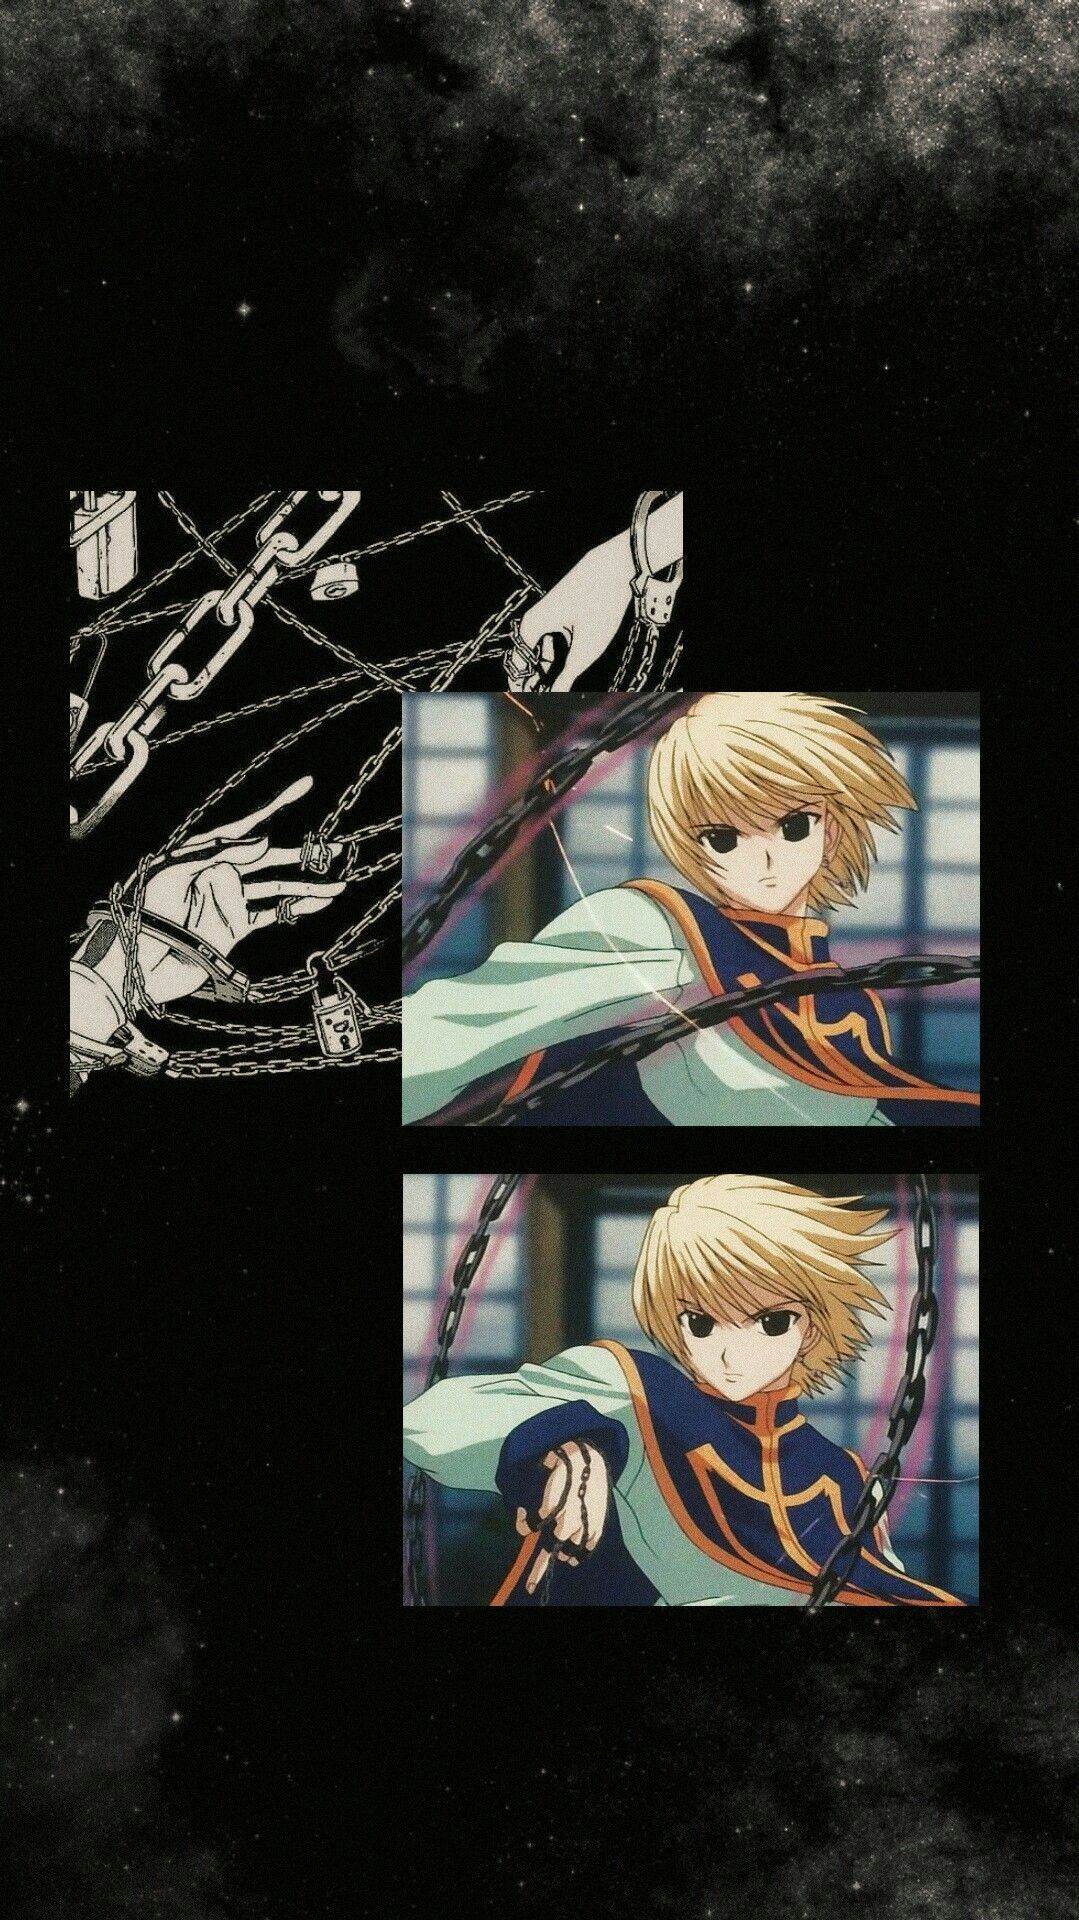 kurapika. Anime background wallpaper, Anime wallpaper, Best anime drawings